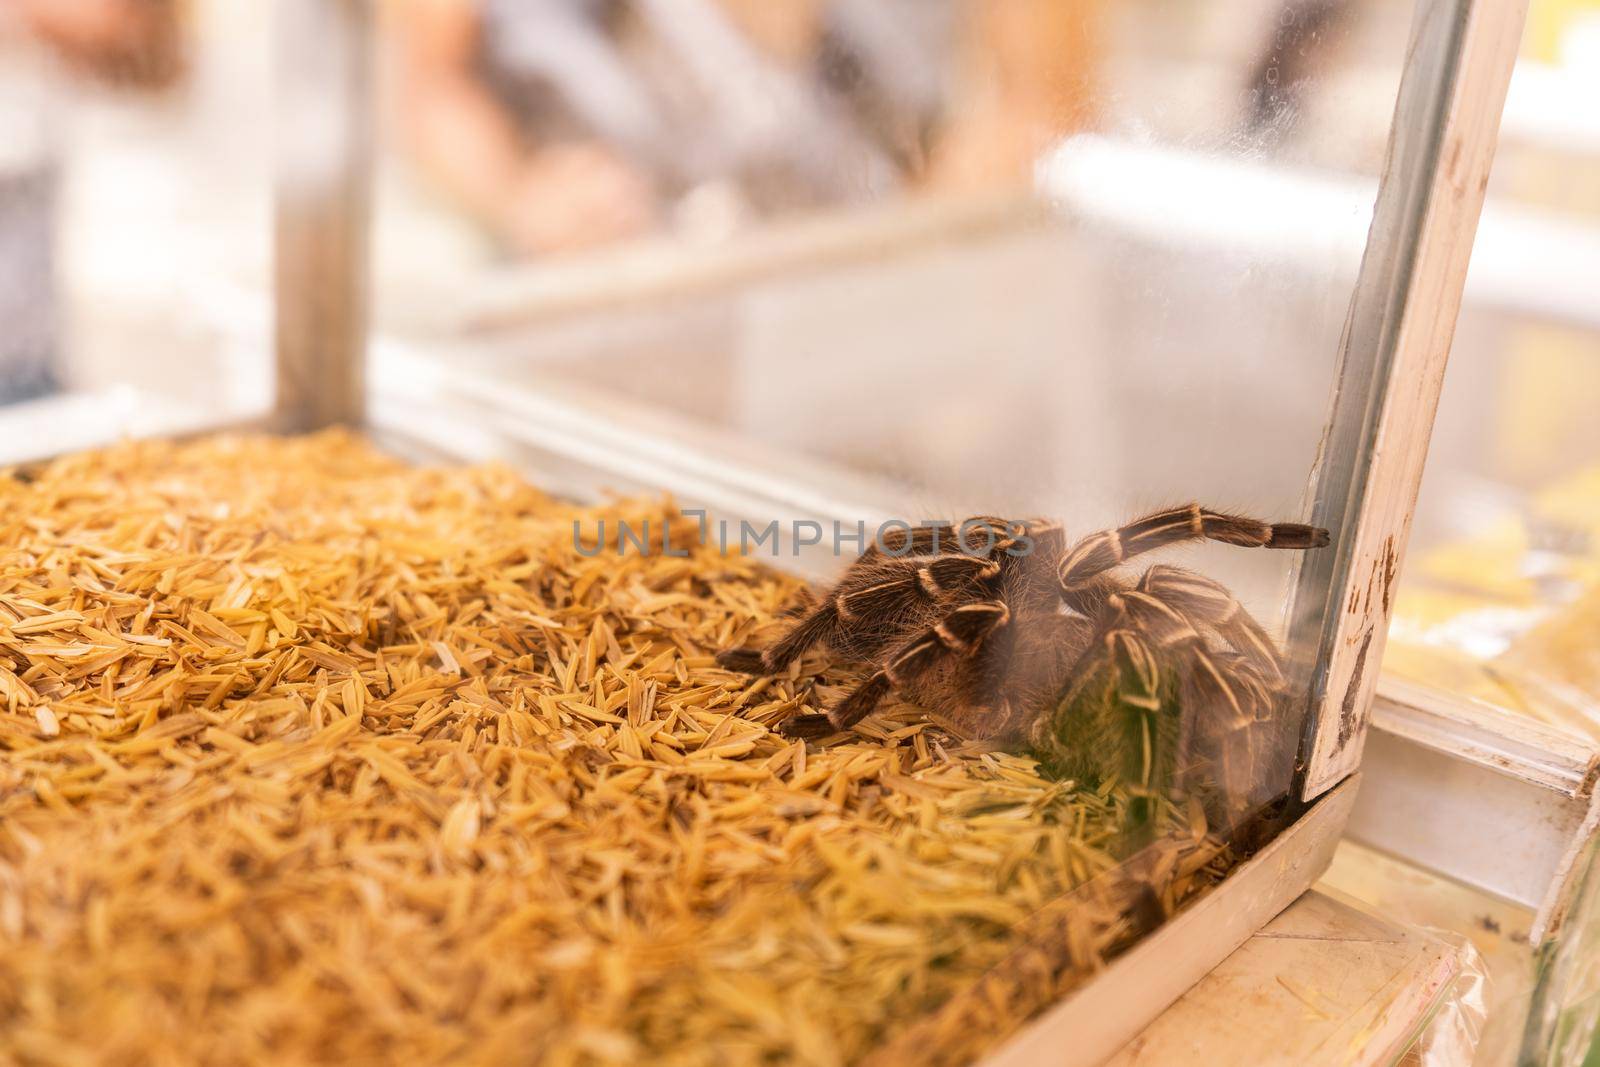 Pet tarantula inside a glass tank at an exotic pet store by cfalvarez